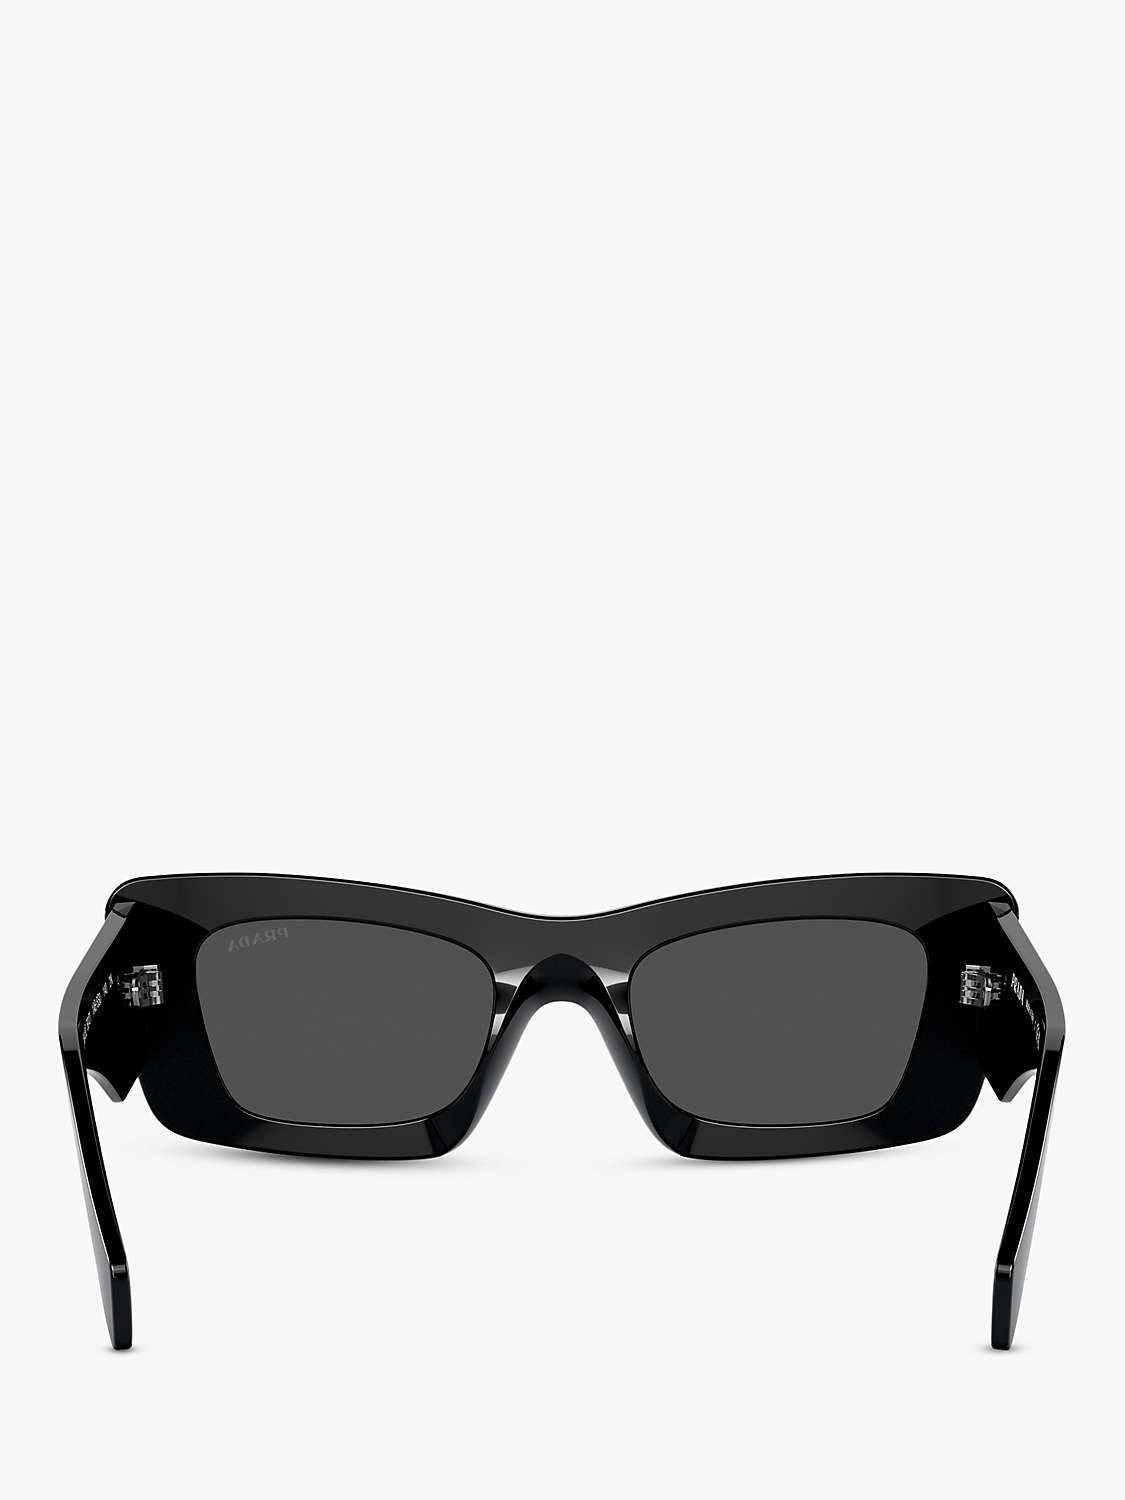 Buy Prada PR 13ZS Women's Cat's Eye Sunglasses Online at johnlewis.com